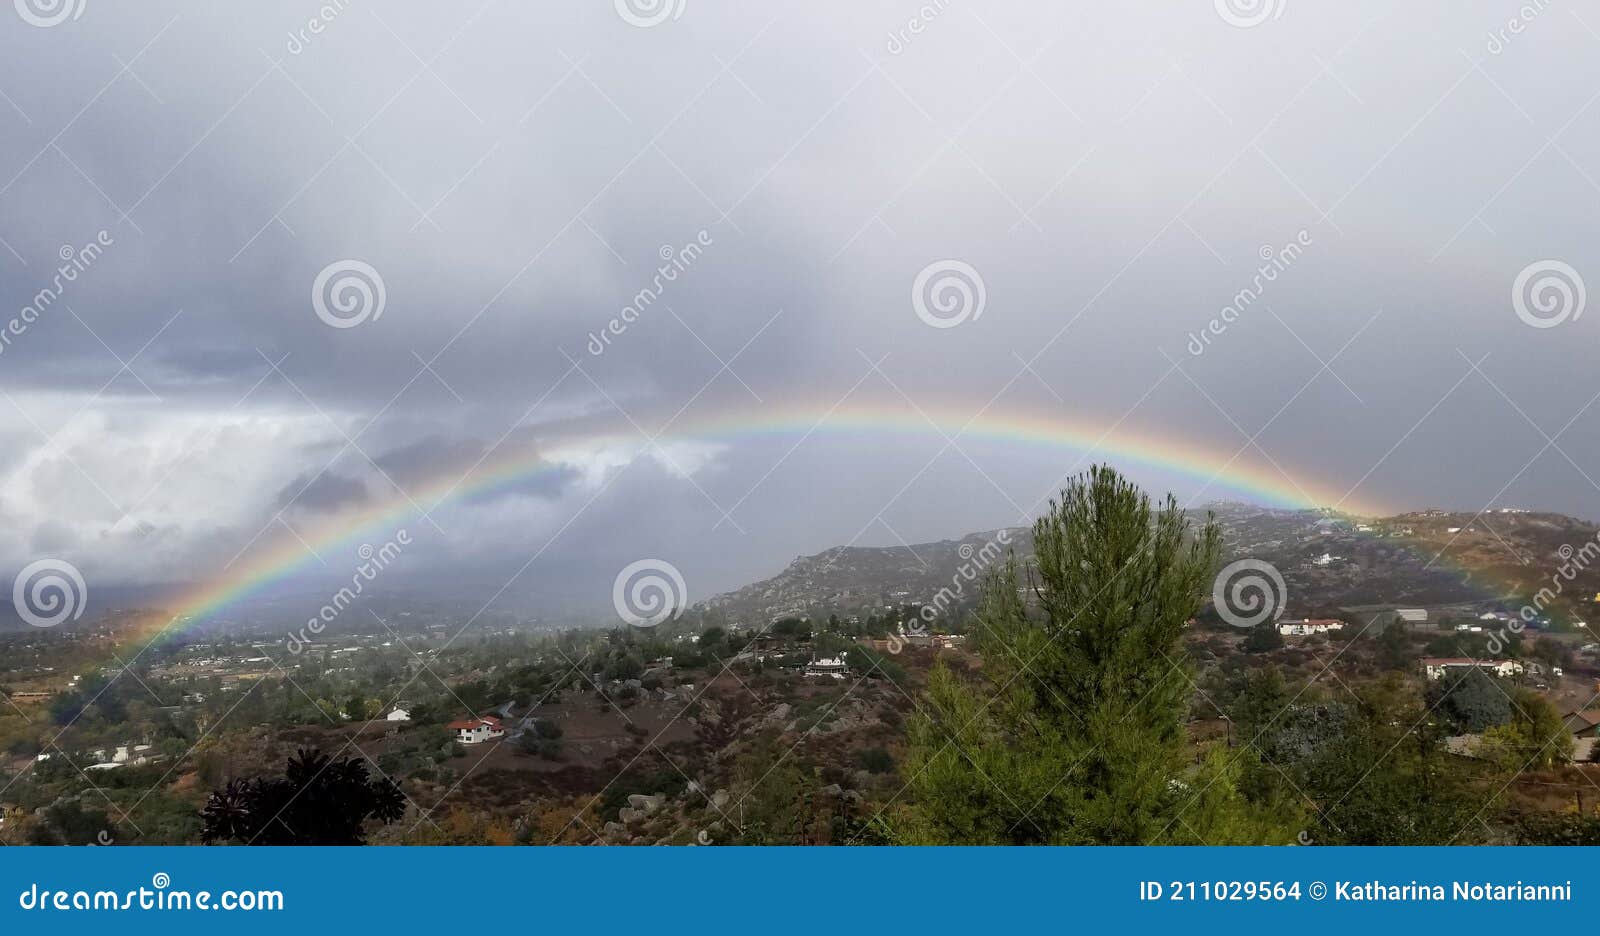 rainbow series: double rainbow over serendipity valley